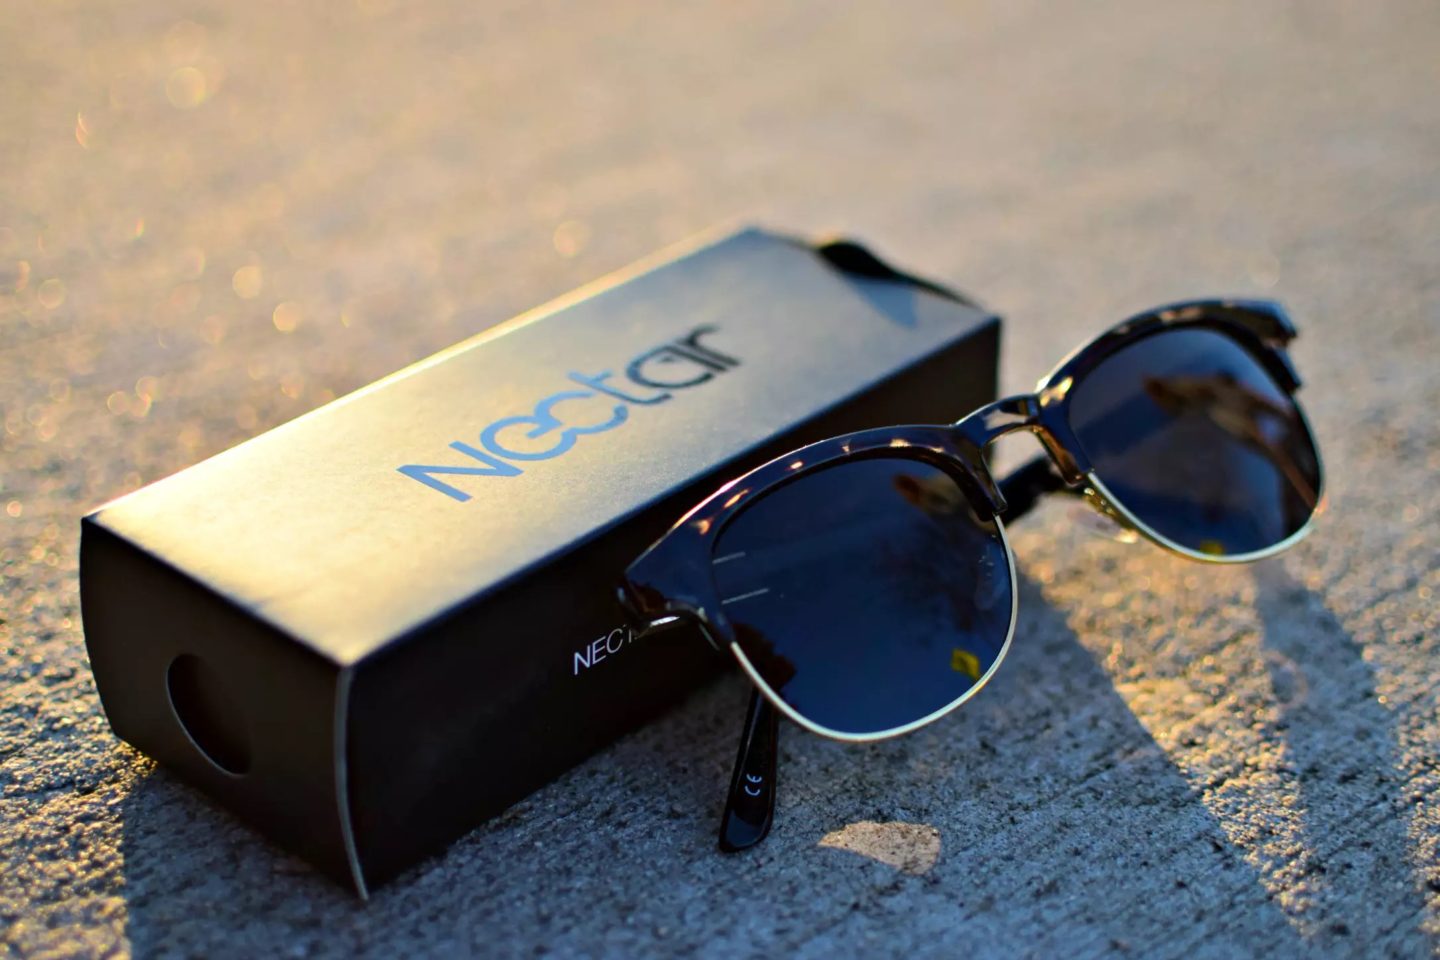 Nectar Sunglasses: Enjoy the Sweet Life